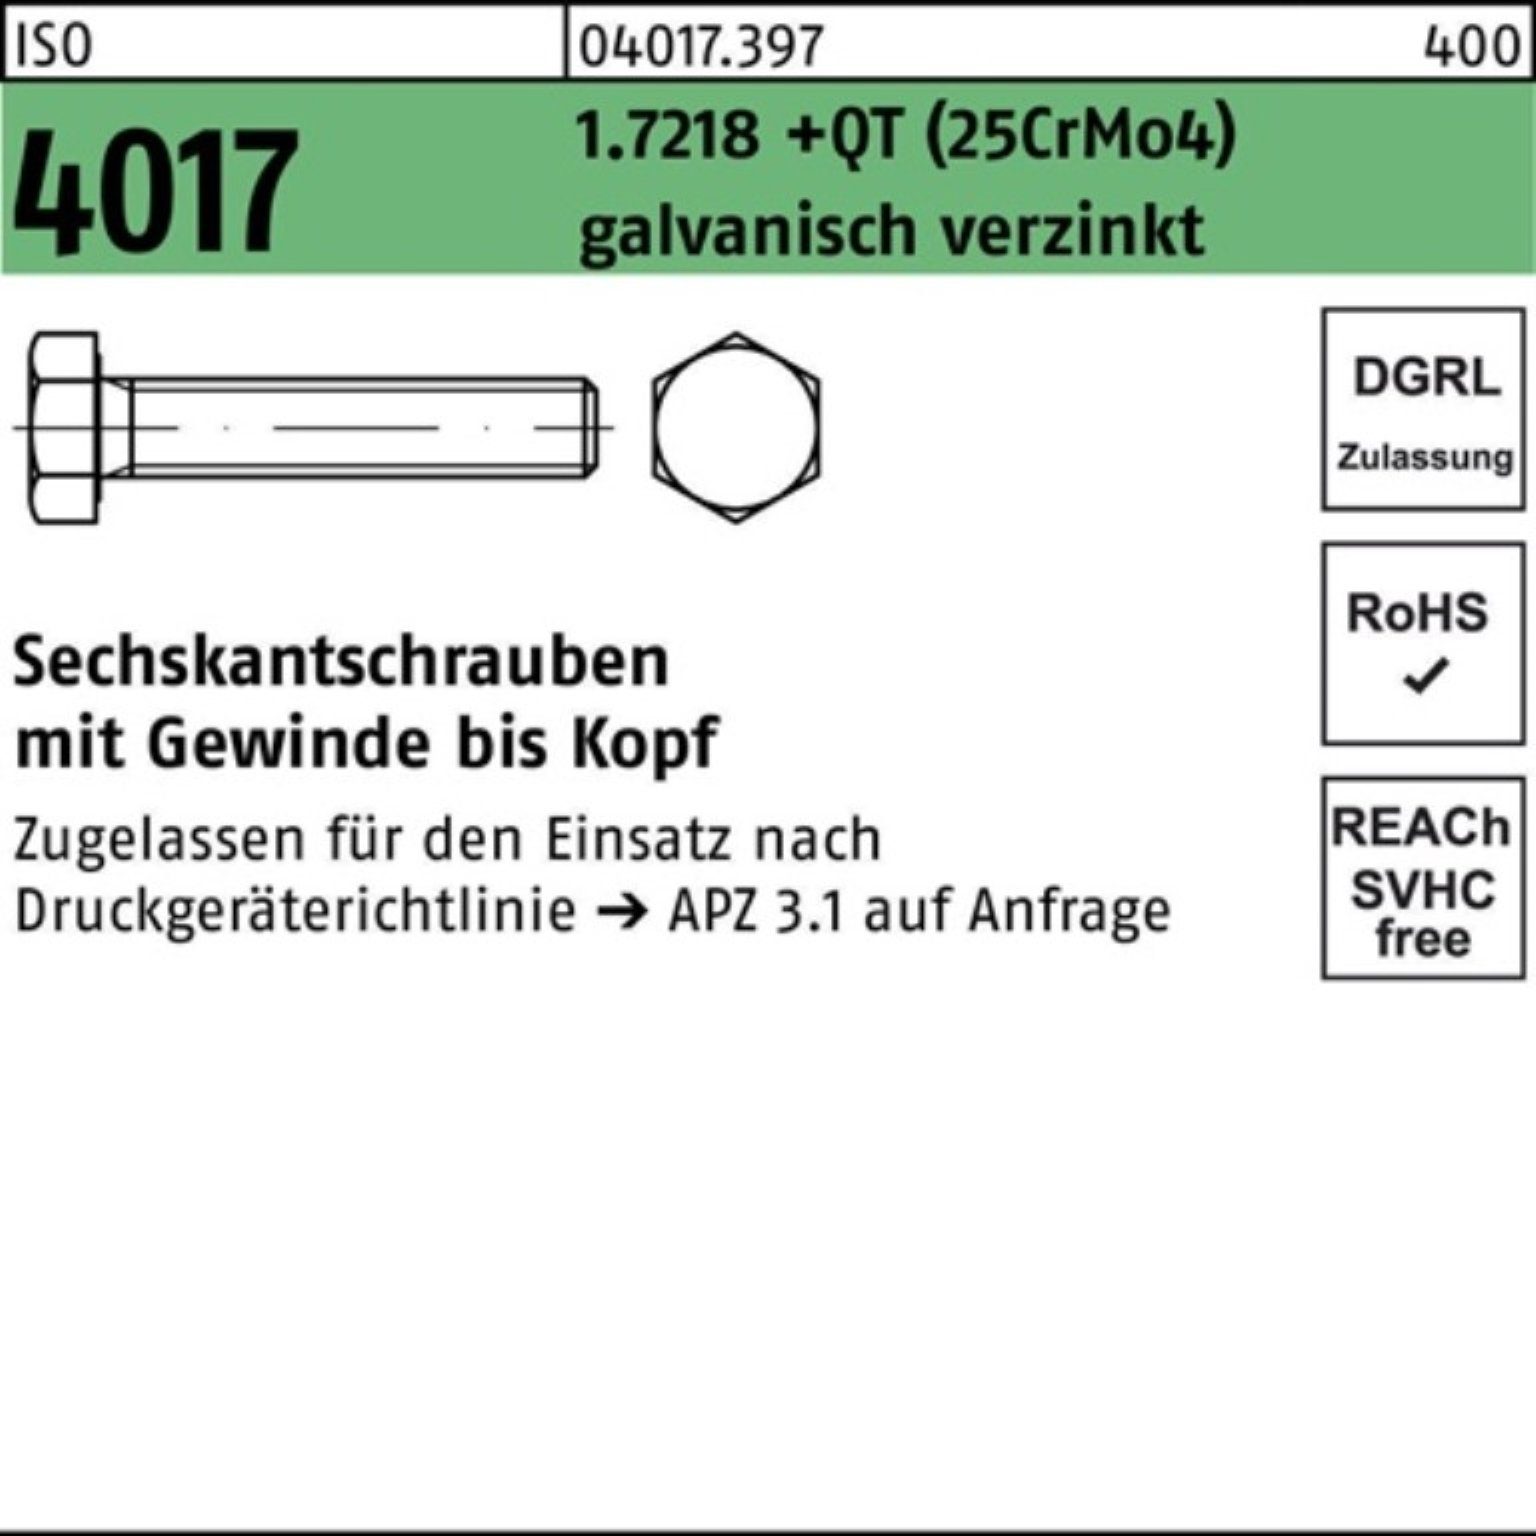 VG Sechskantschraube 4017 (25CrMo4) +QT Sechskantschraube 1.7218 100er Bufab M20x200 Pack ISO